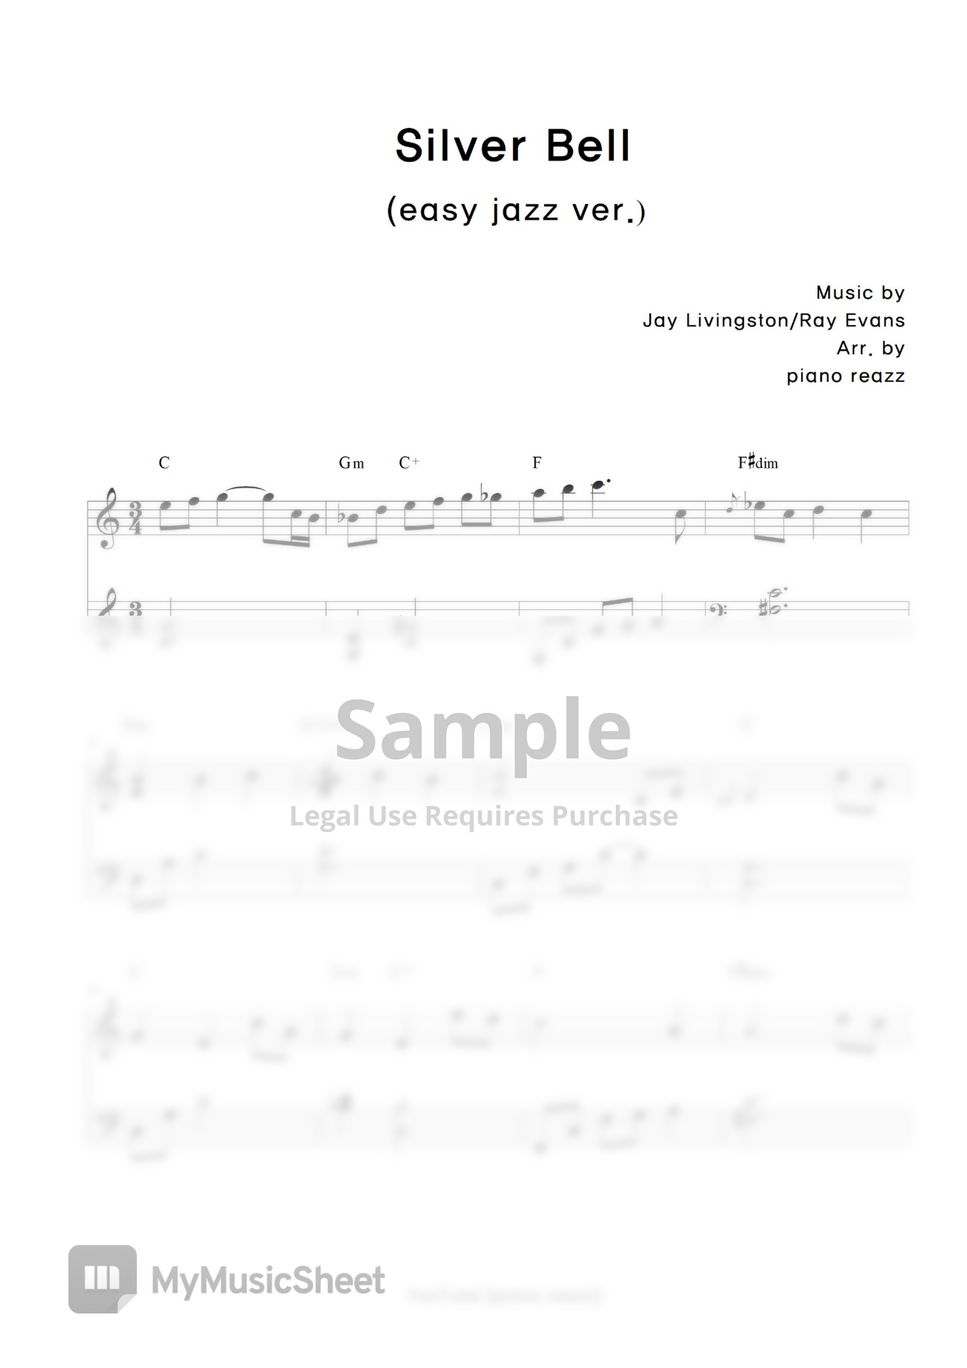 Carol - Silver Bell (easy jazz) by piano reazz